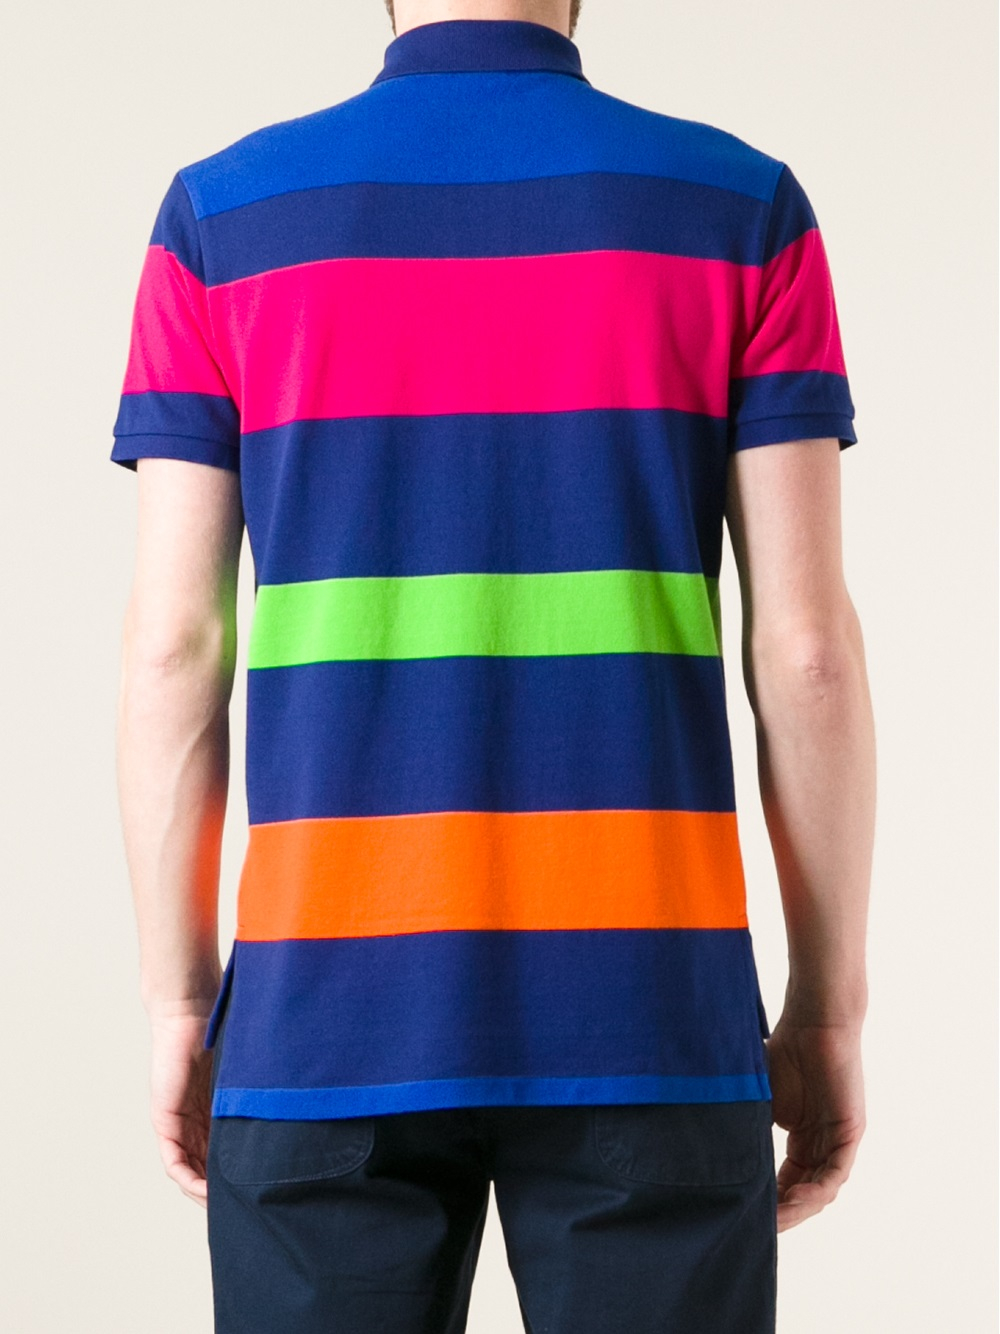 Lyst - Polo Ralph Lauren Block Stripe Polo Shirt in Blue for Men